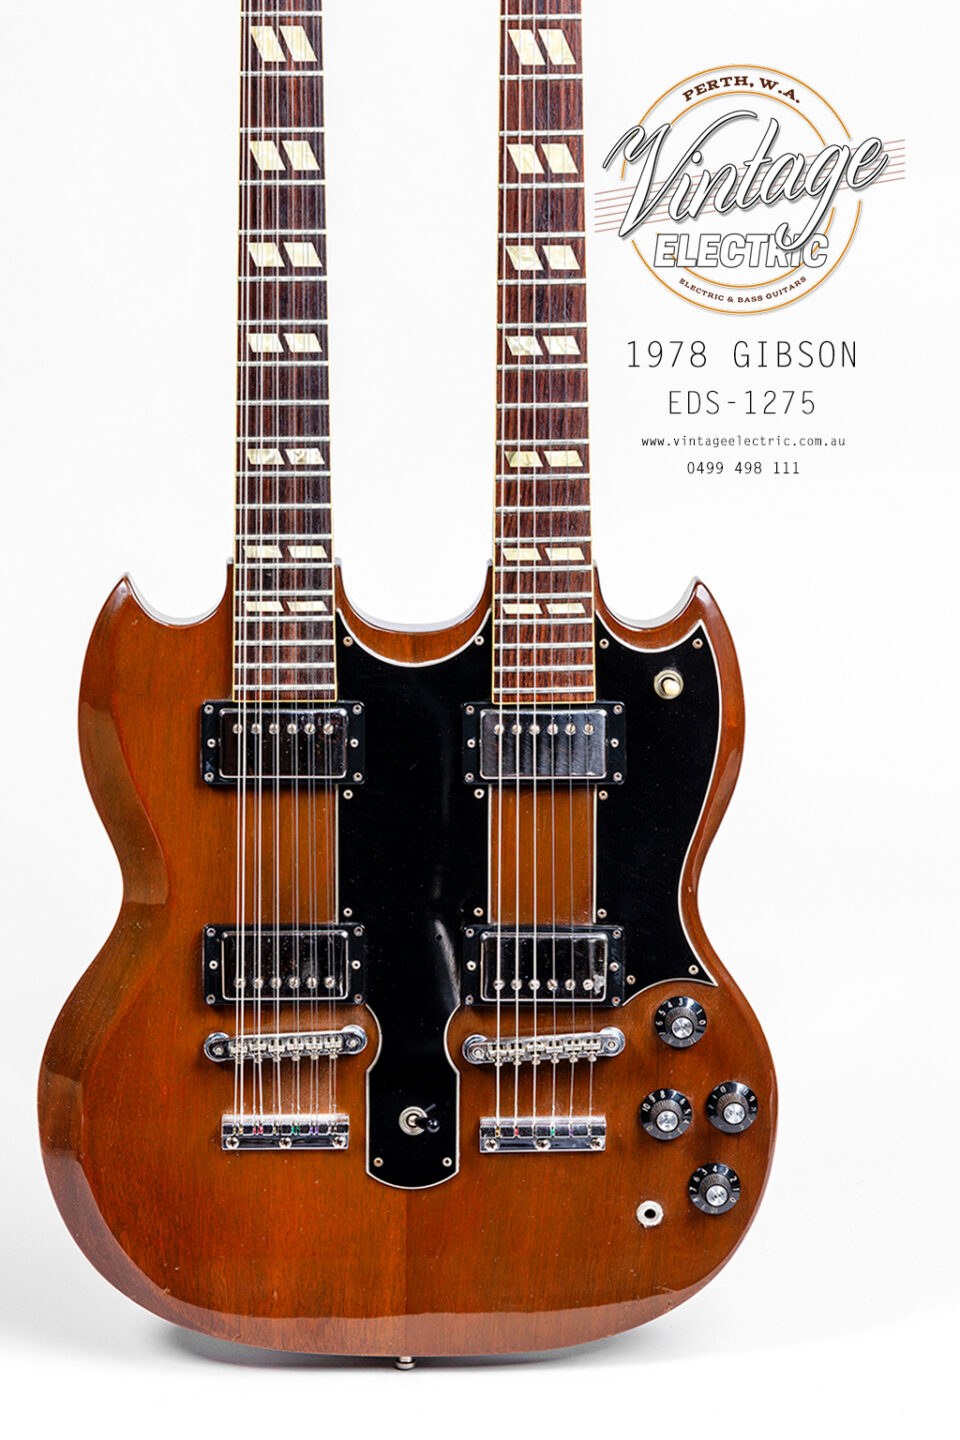 1978 Gibson EDS 1275 Body